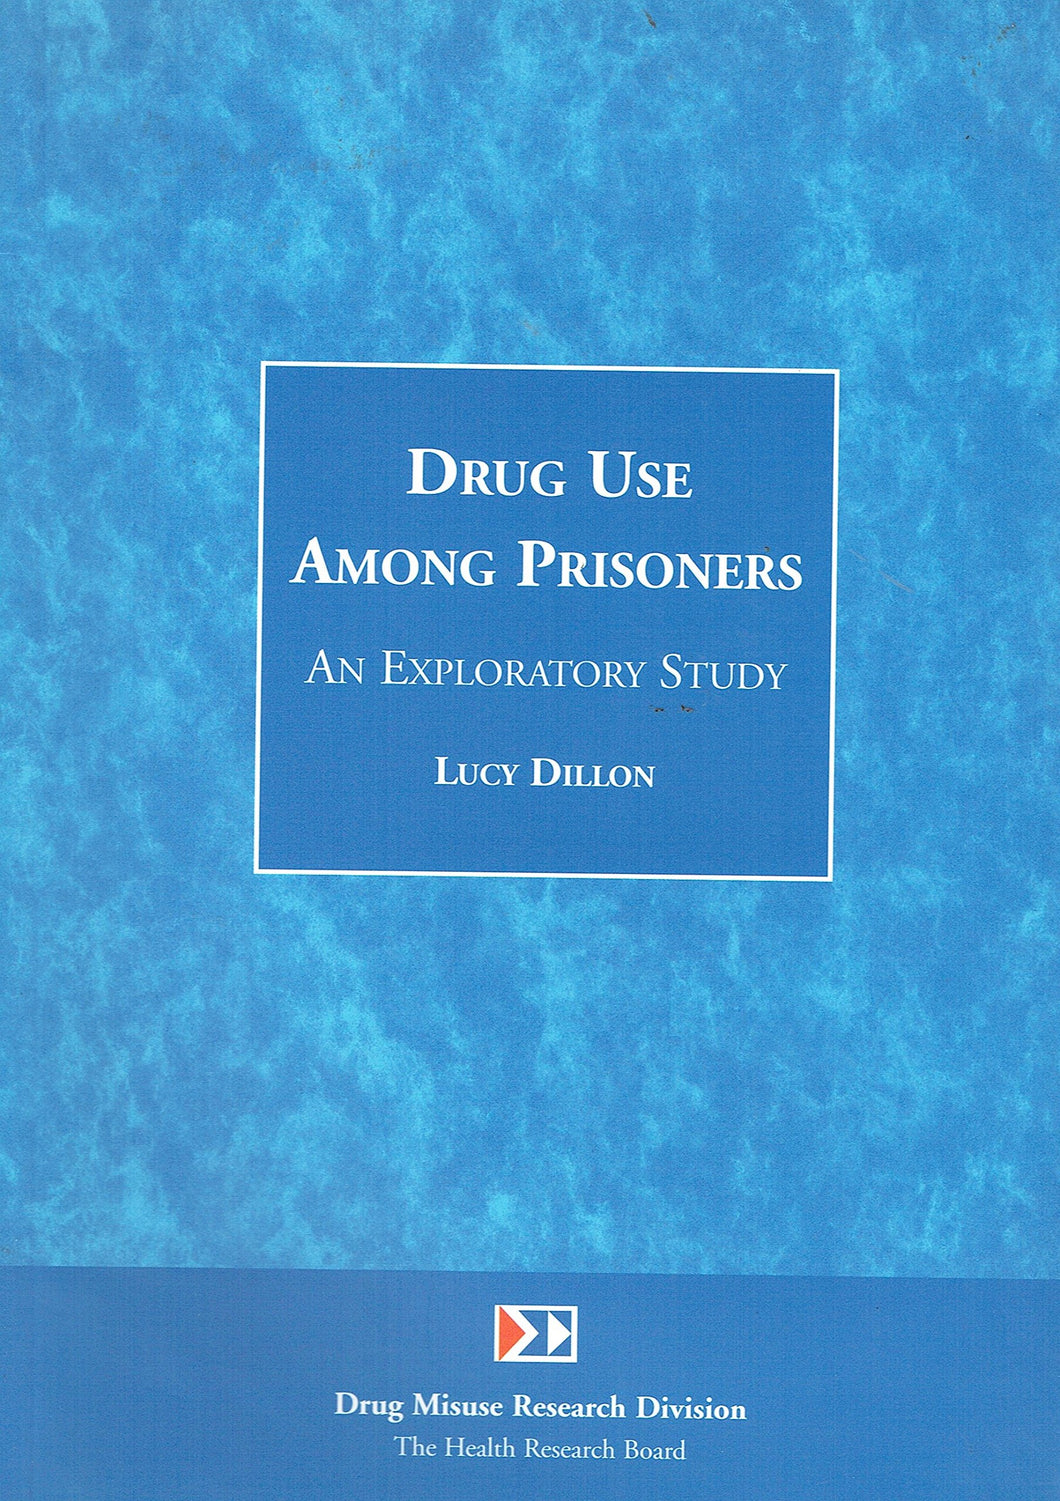 Drug use among prisoners: An exploratory study